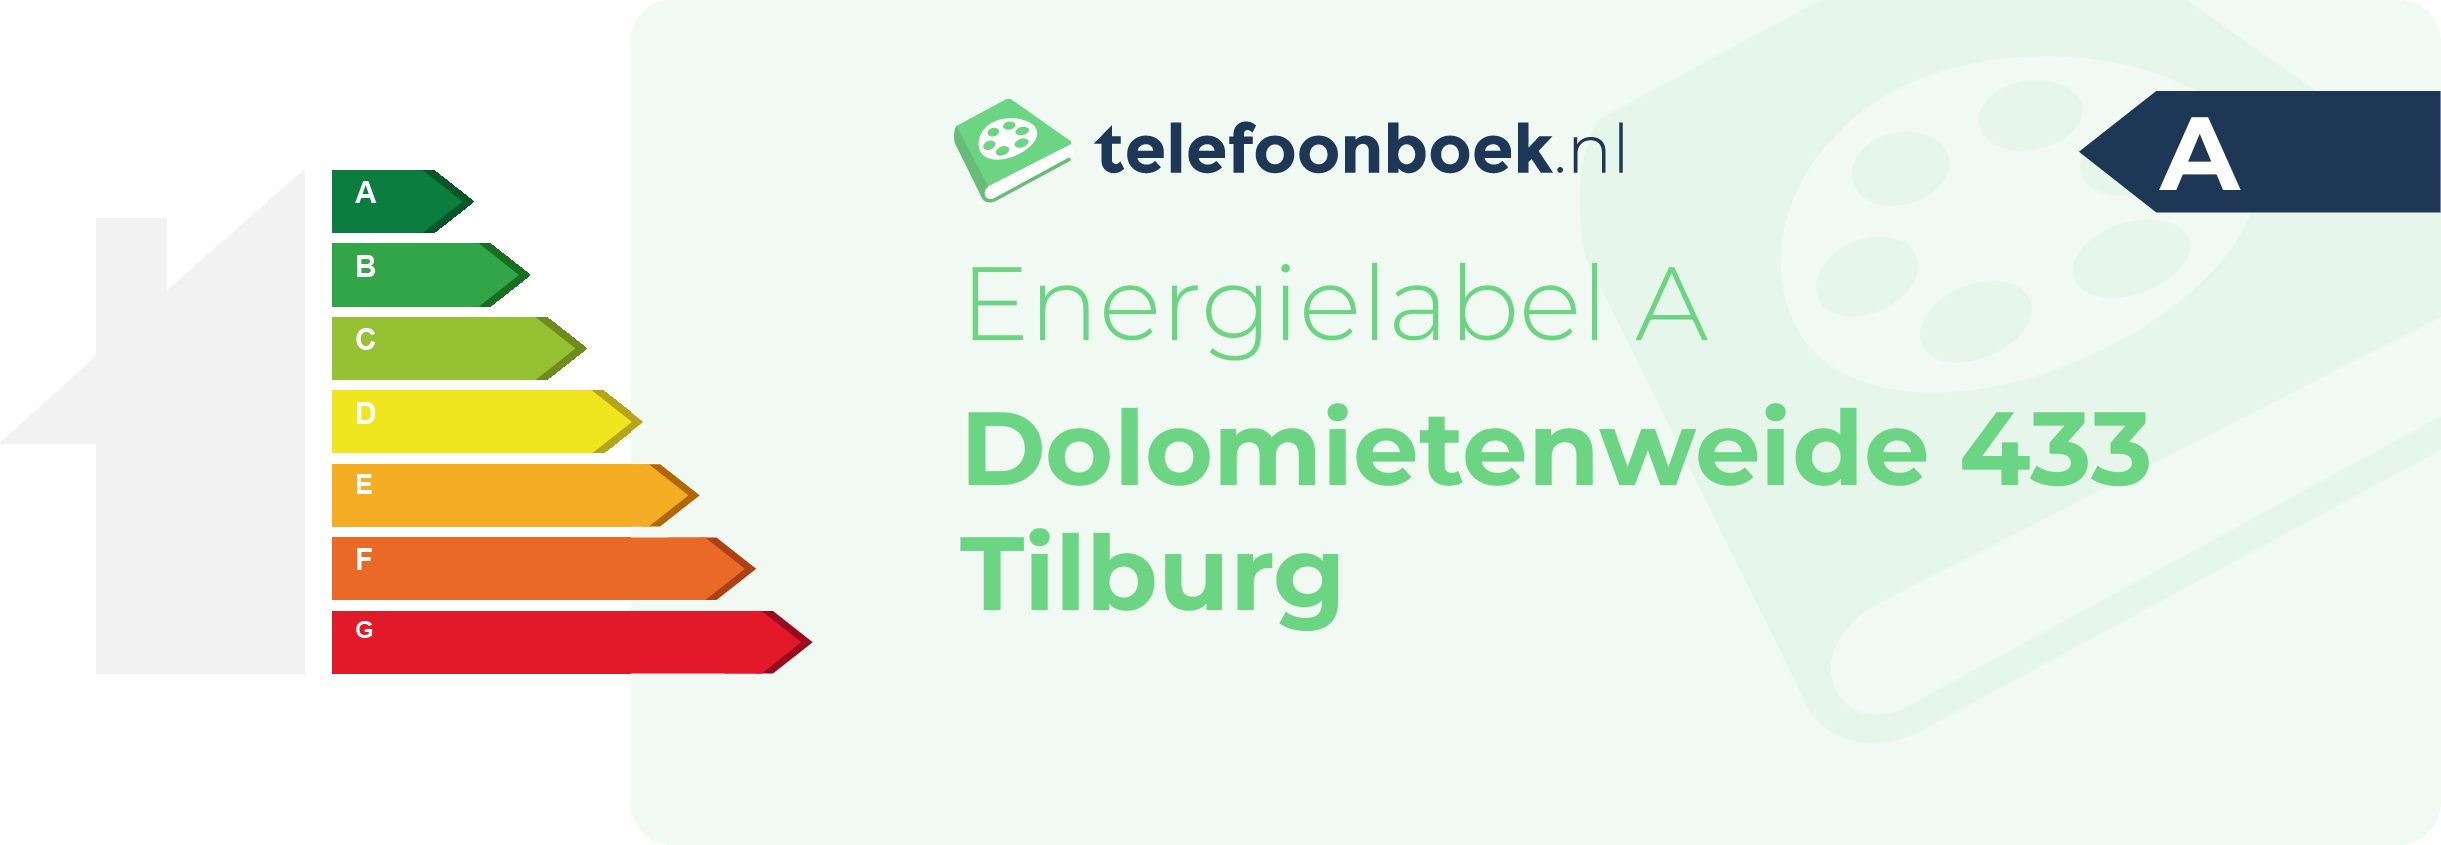 Energielabel Dolomietenweide 433 Tilburg